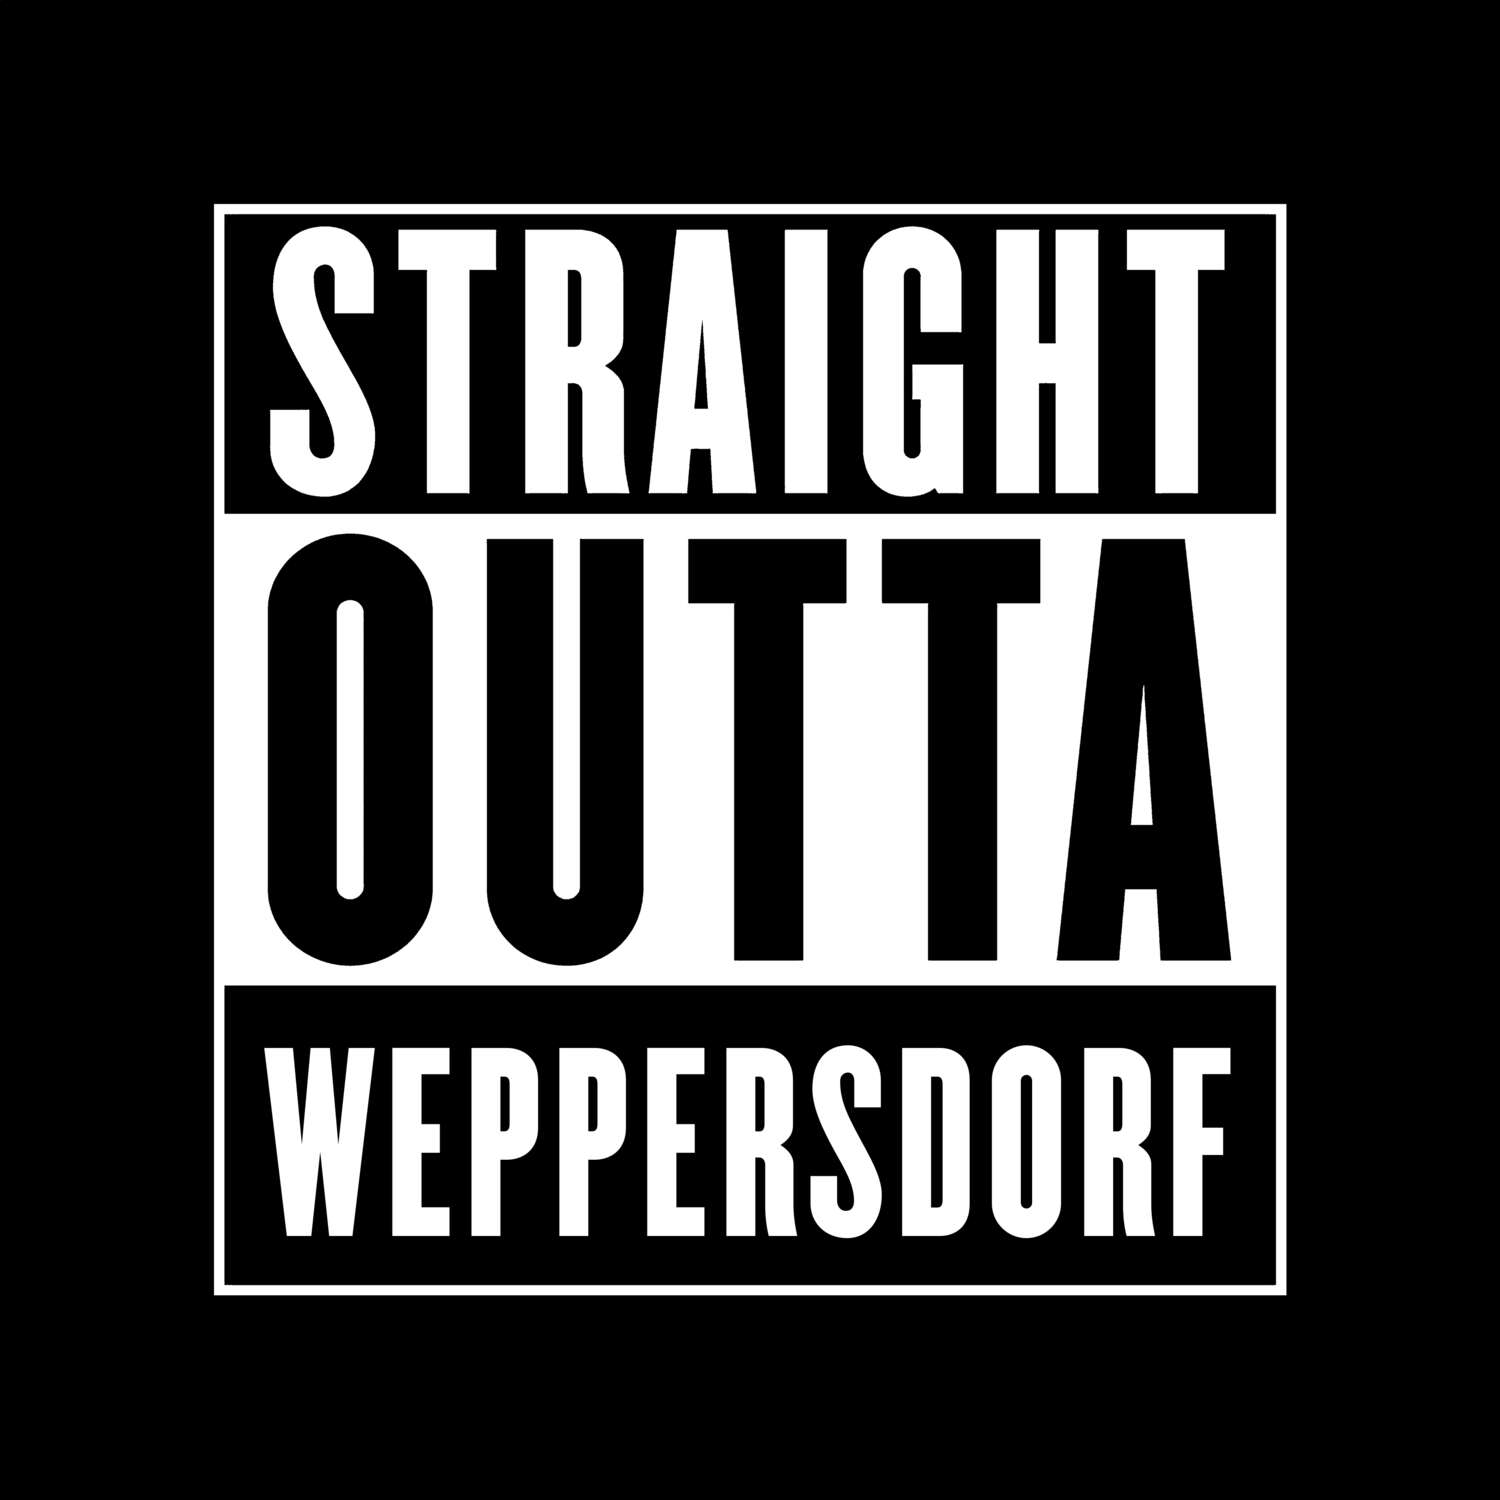 Weppersdorf T-Shirt »Straight Outta«